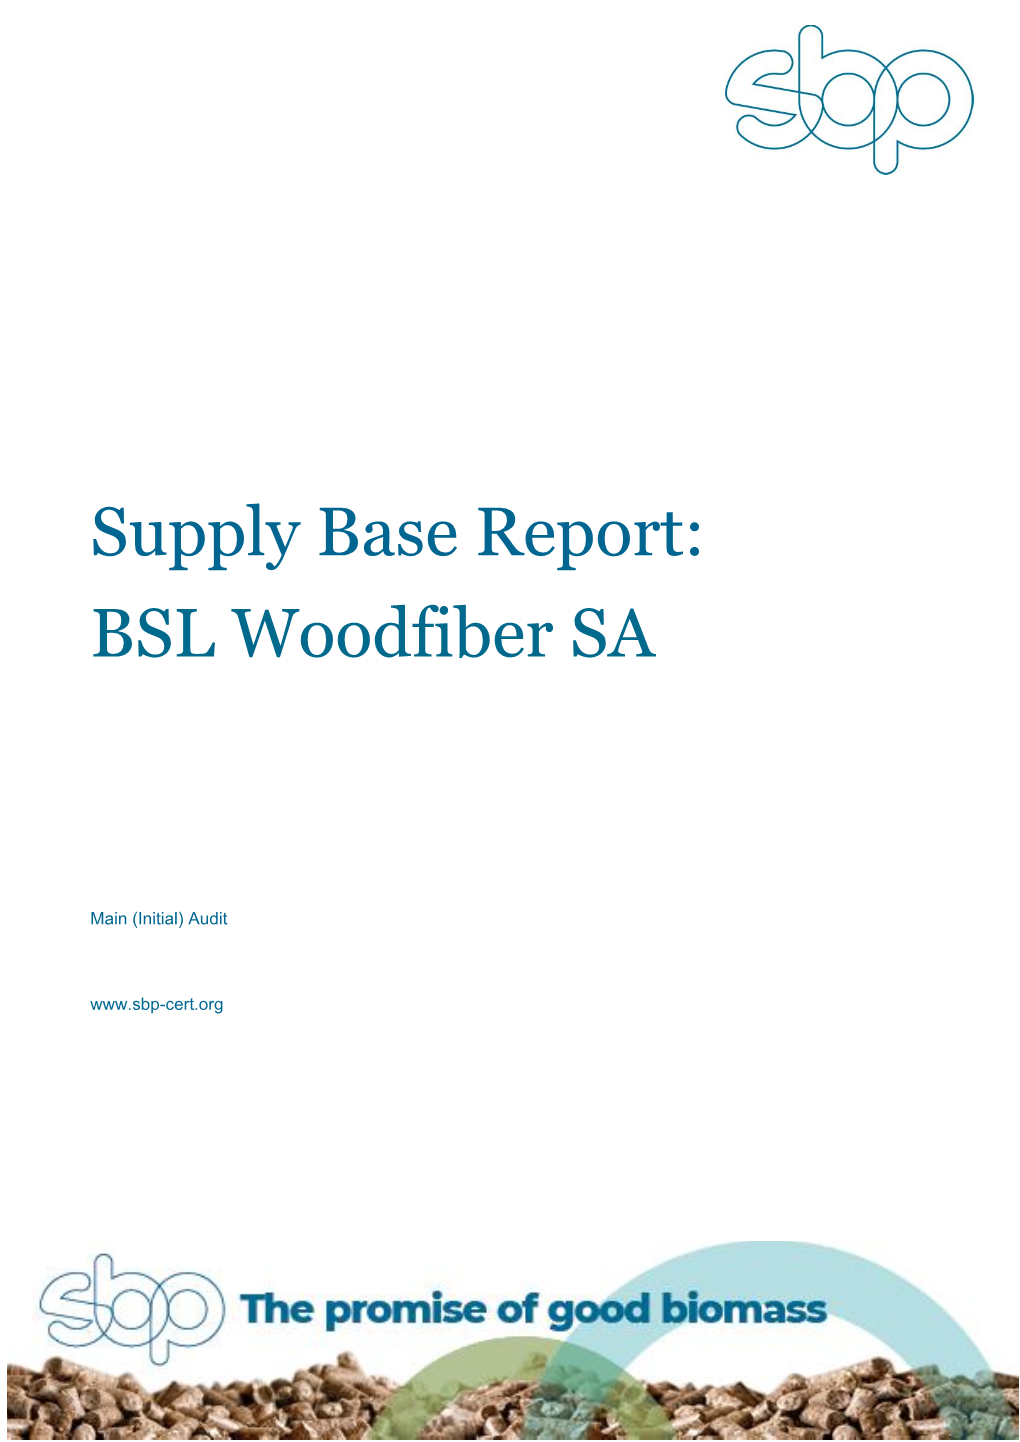 Supply Base Report: BSL Woodfiber SA